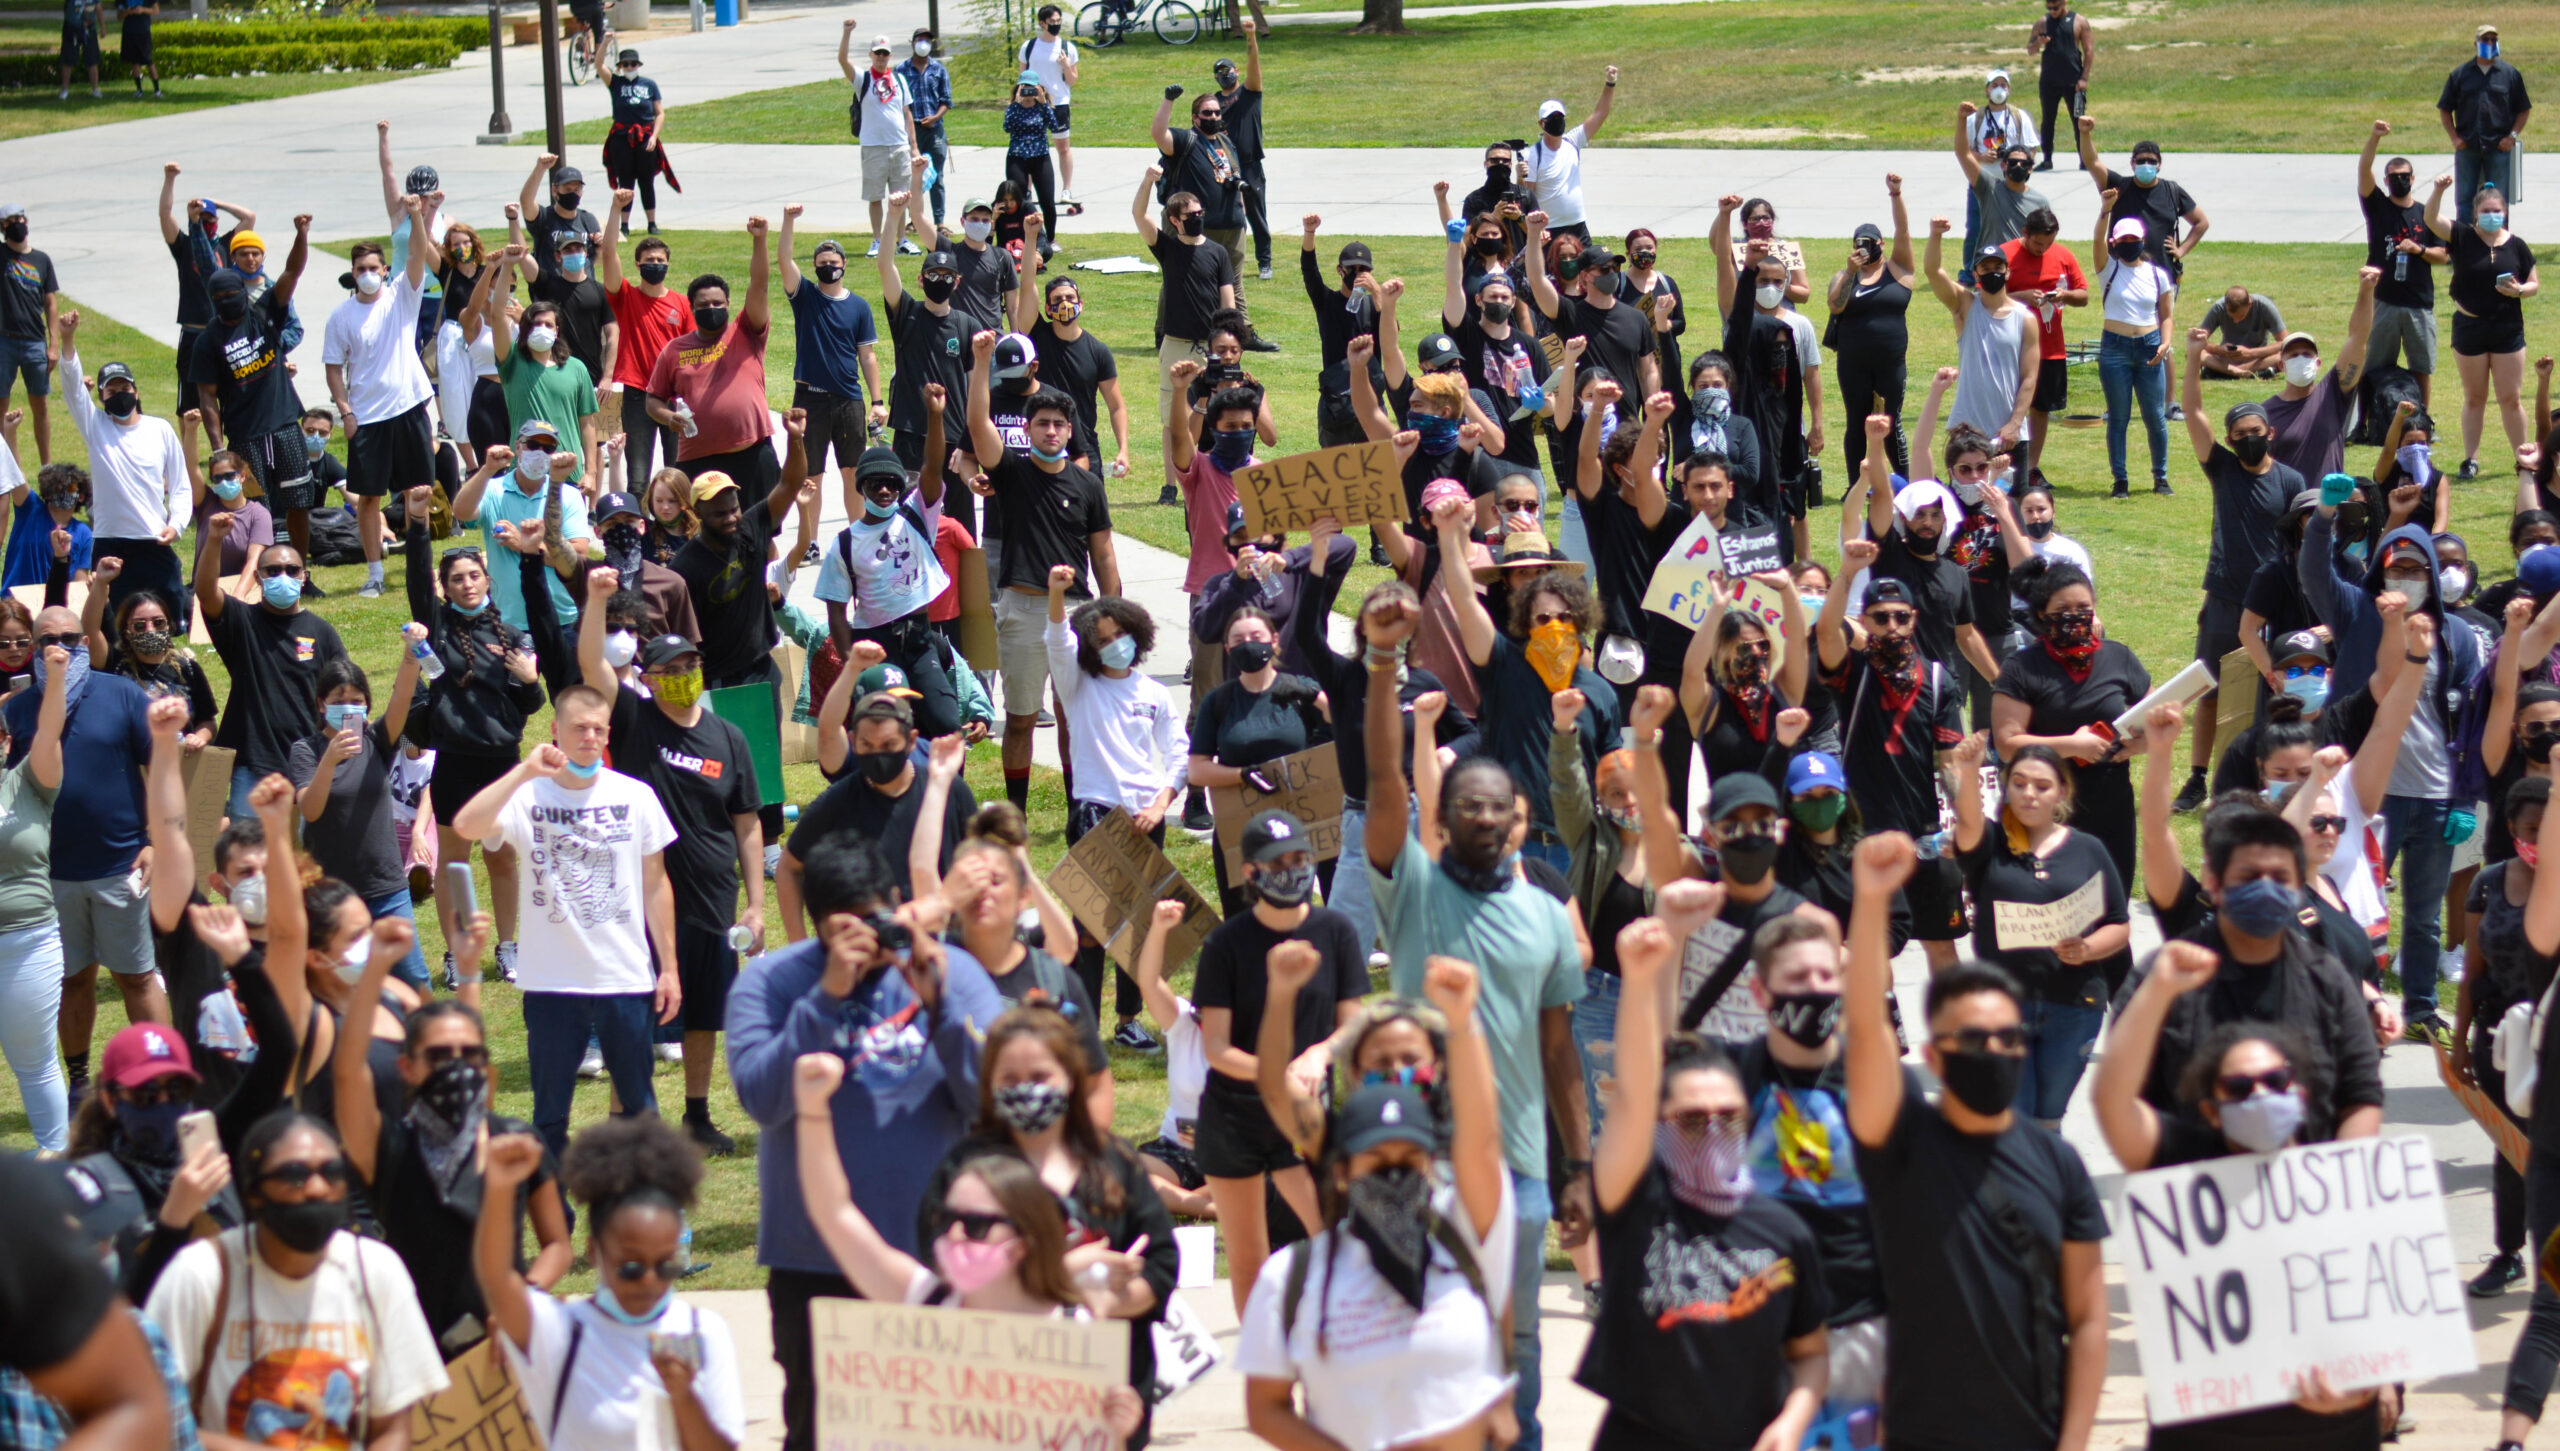 Northridge Black Lives Matter group launch protest at Oviatt steps